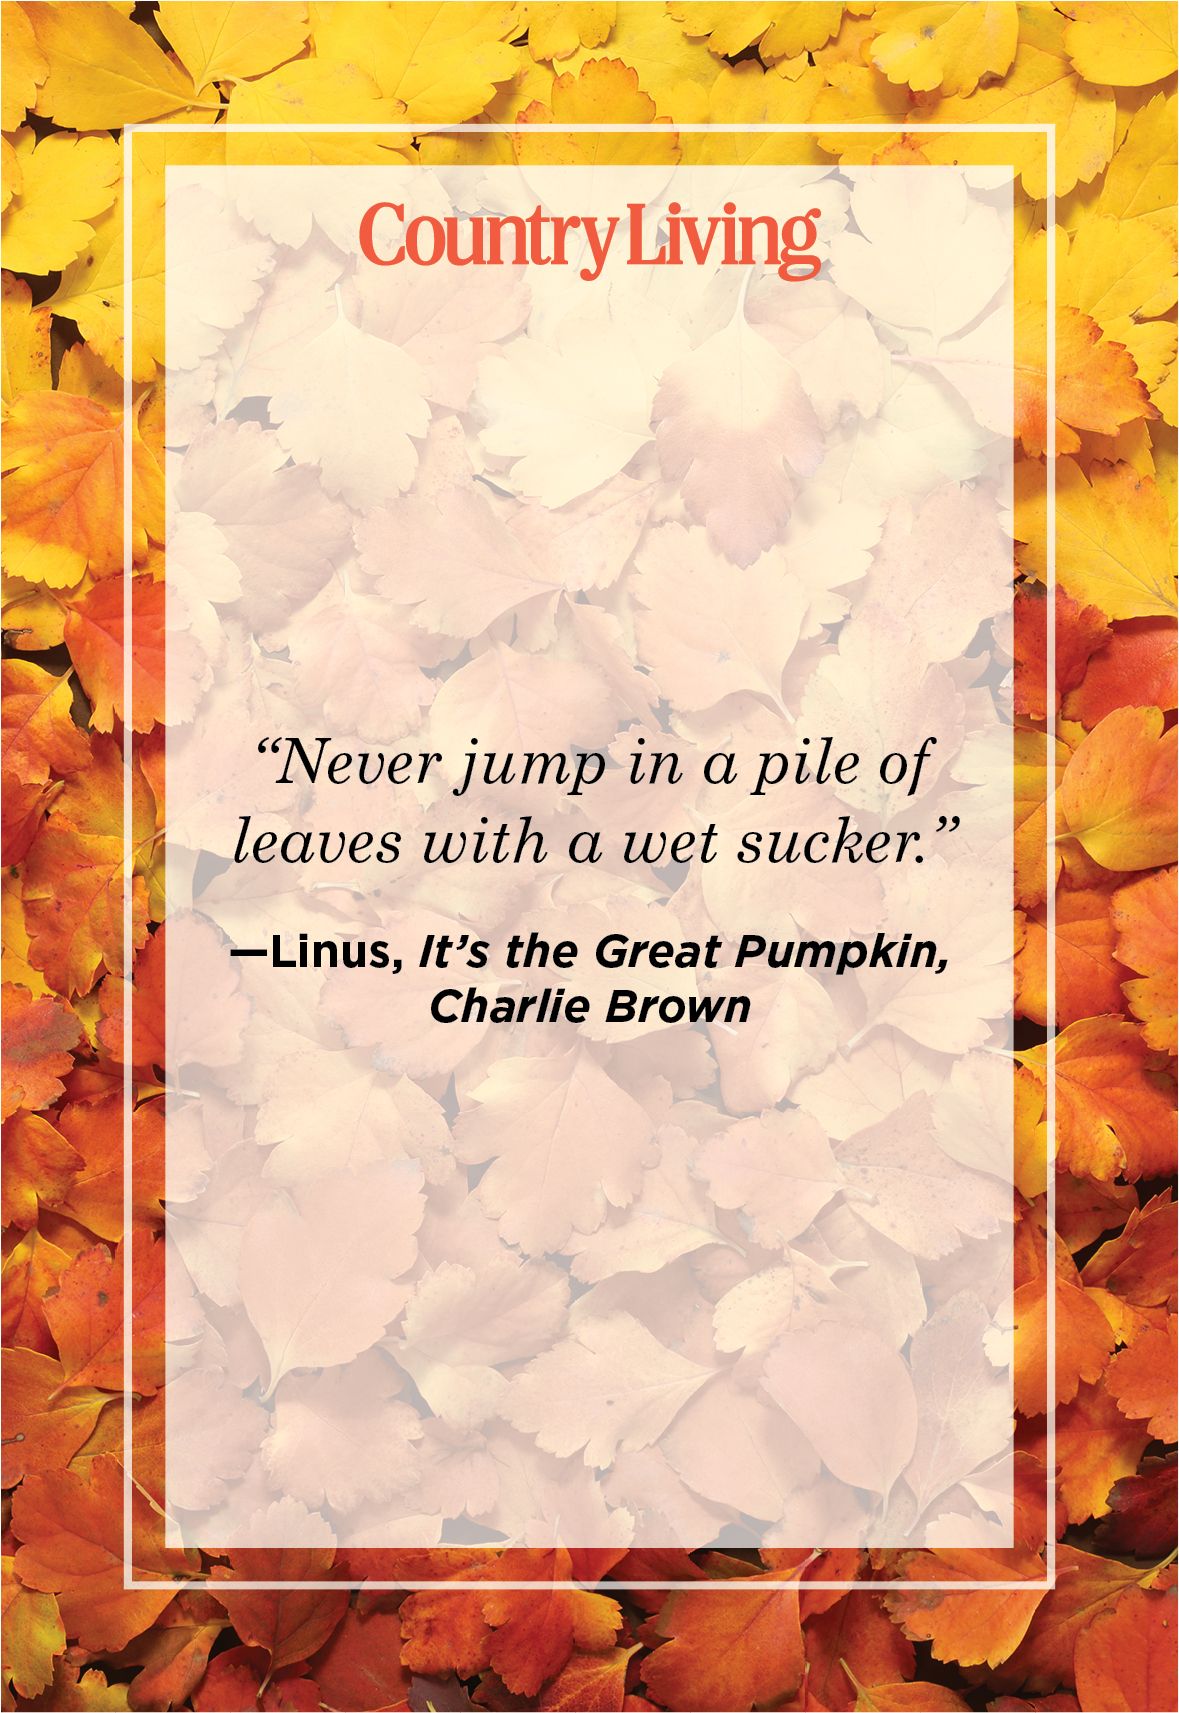 fall season quotes